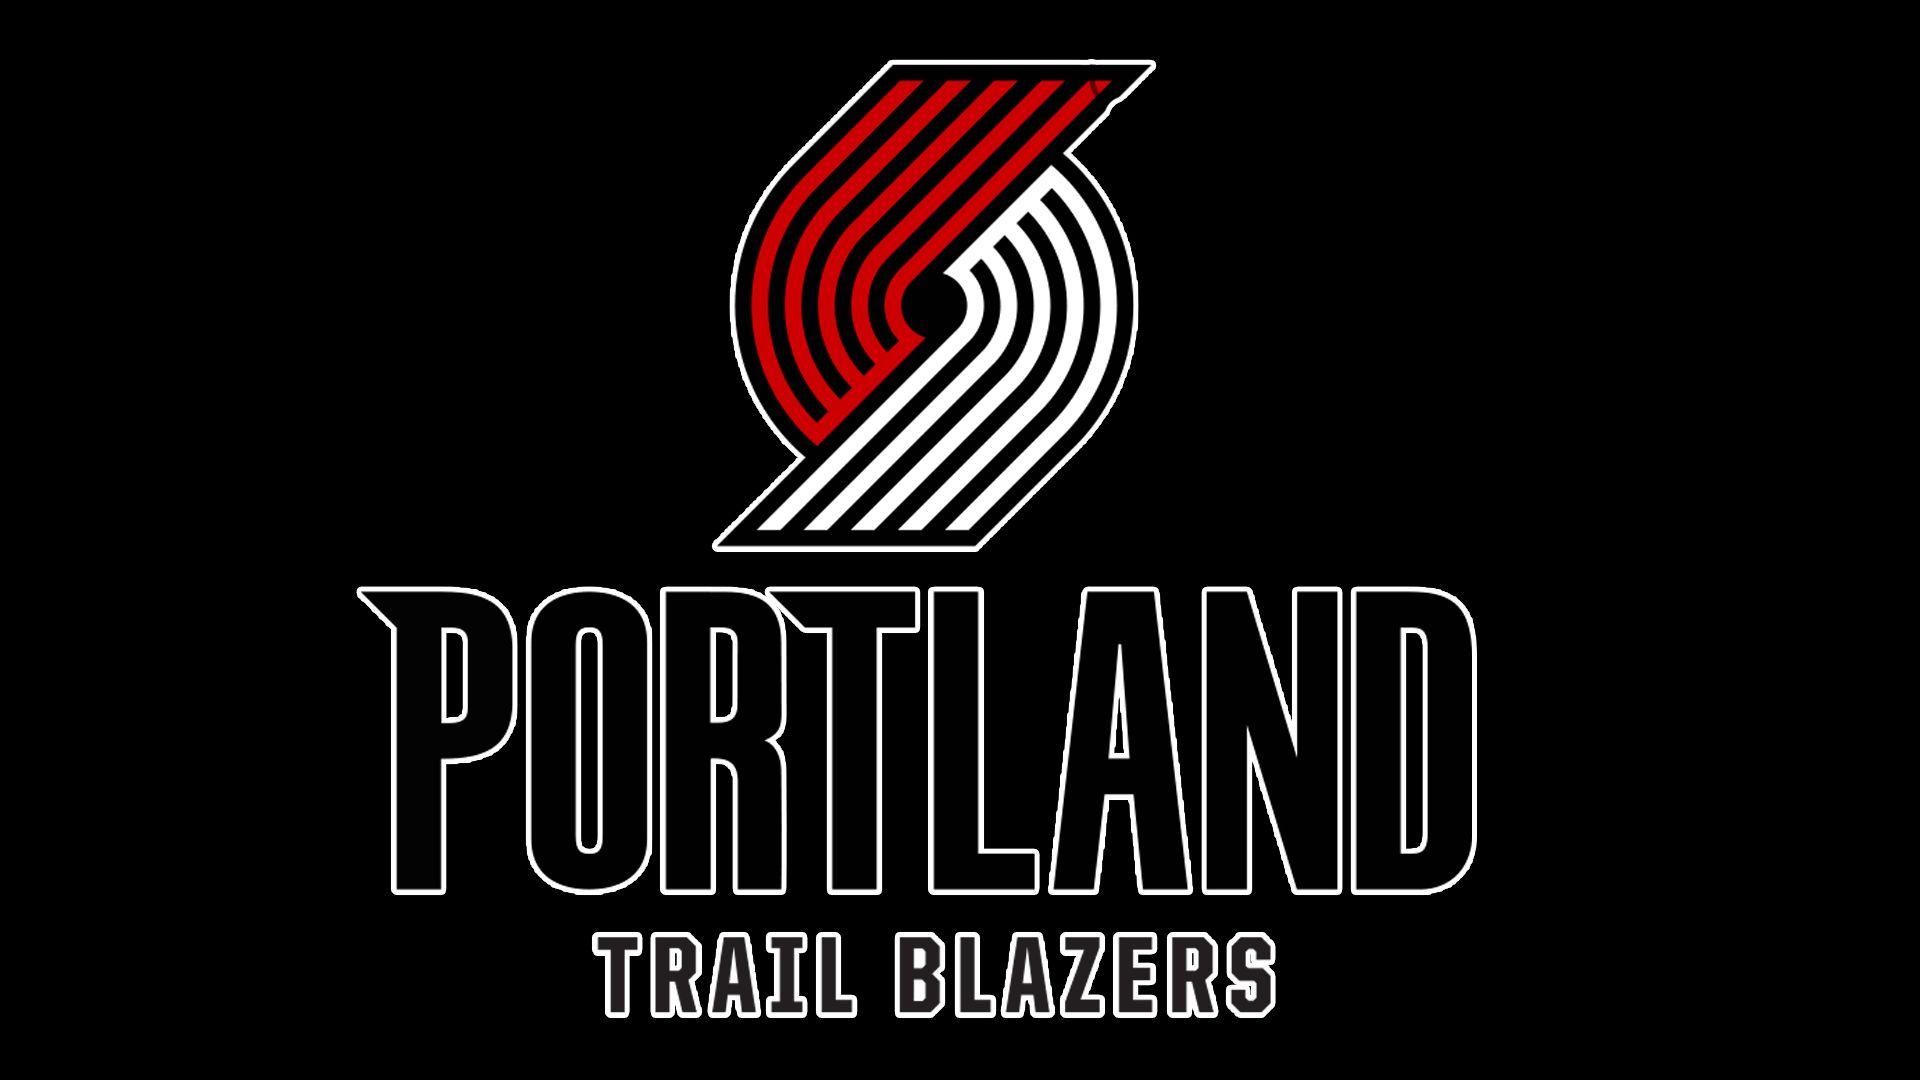 Blazers Logo - Meaning Portland Trail Blazers logo and symbol | history and evolution